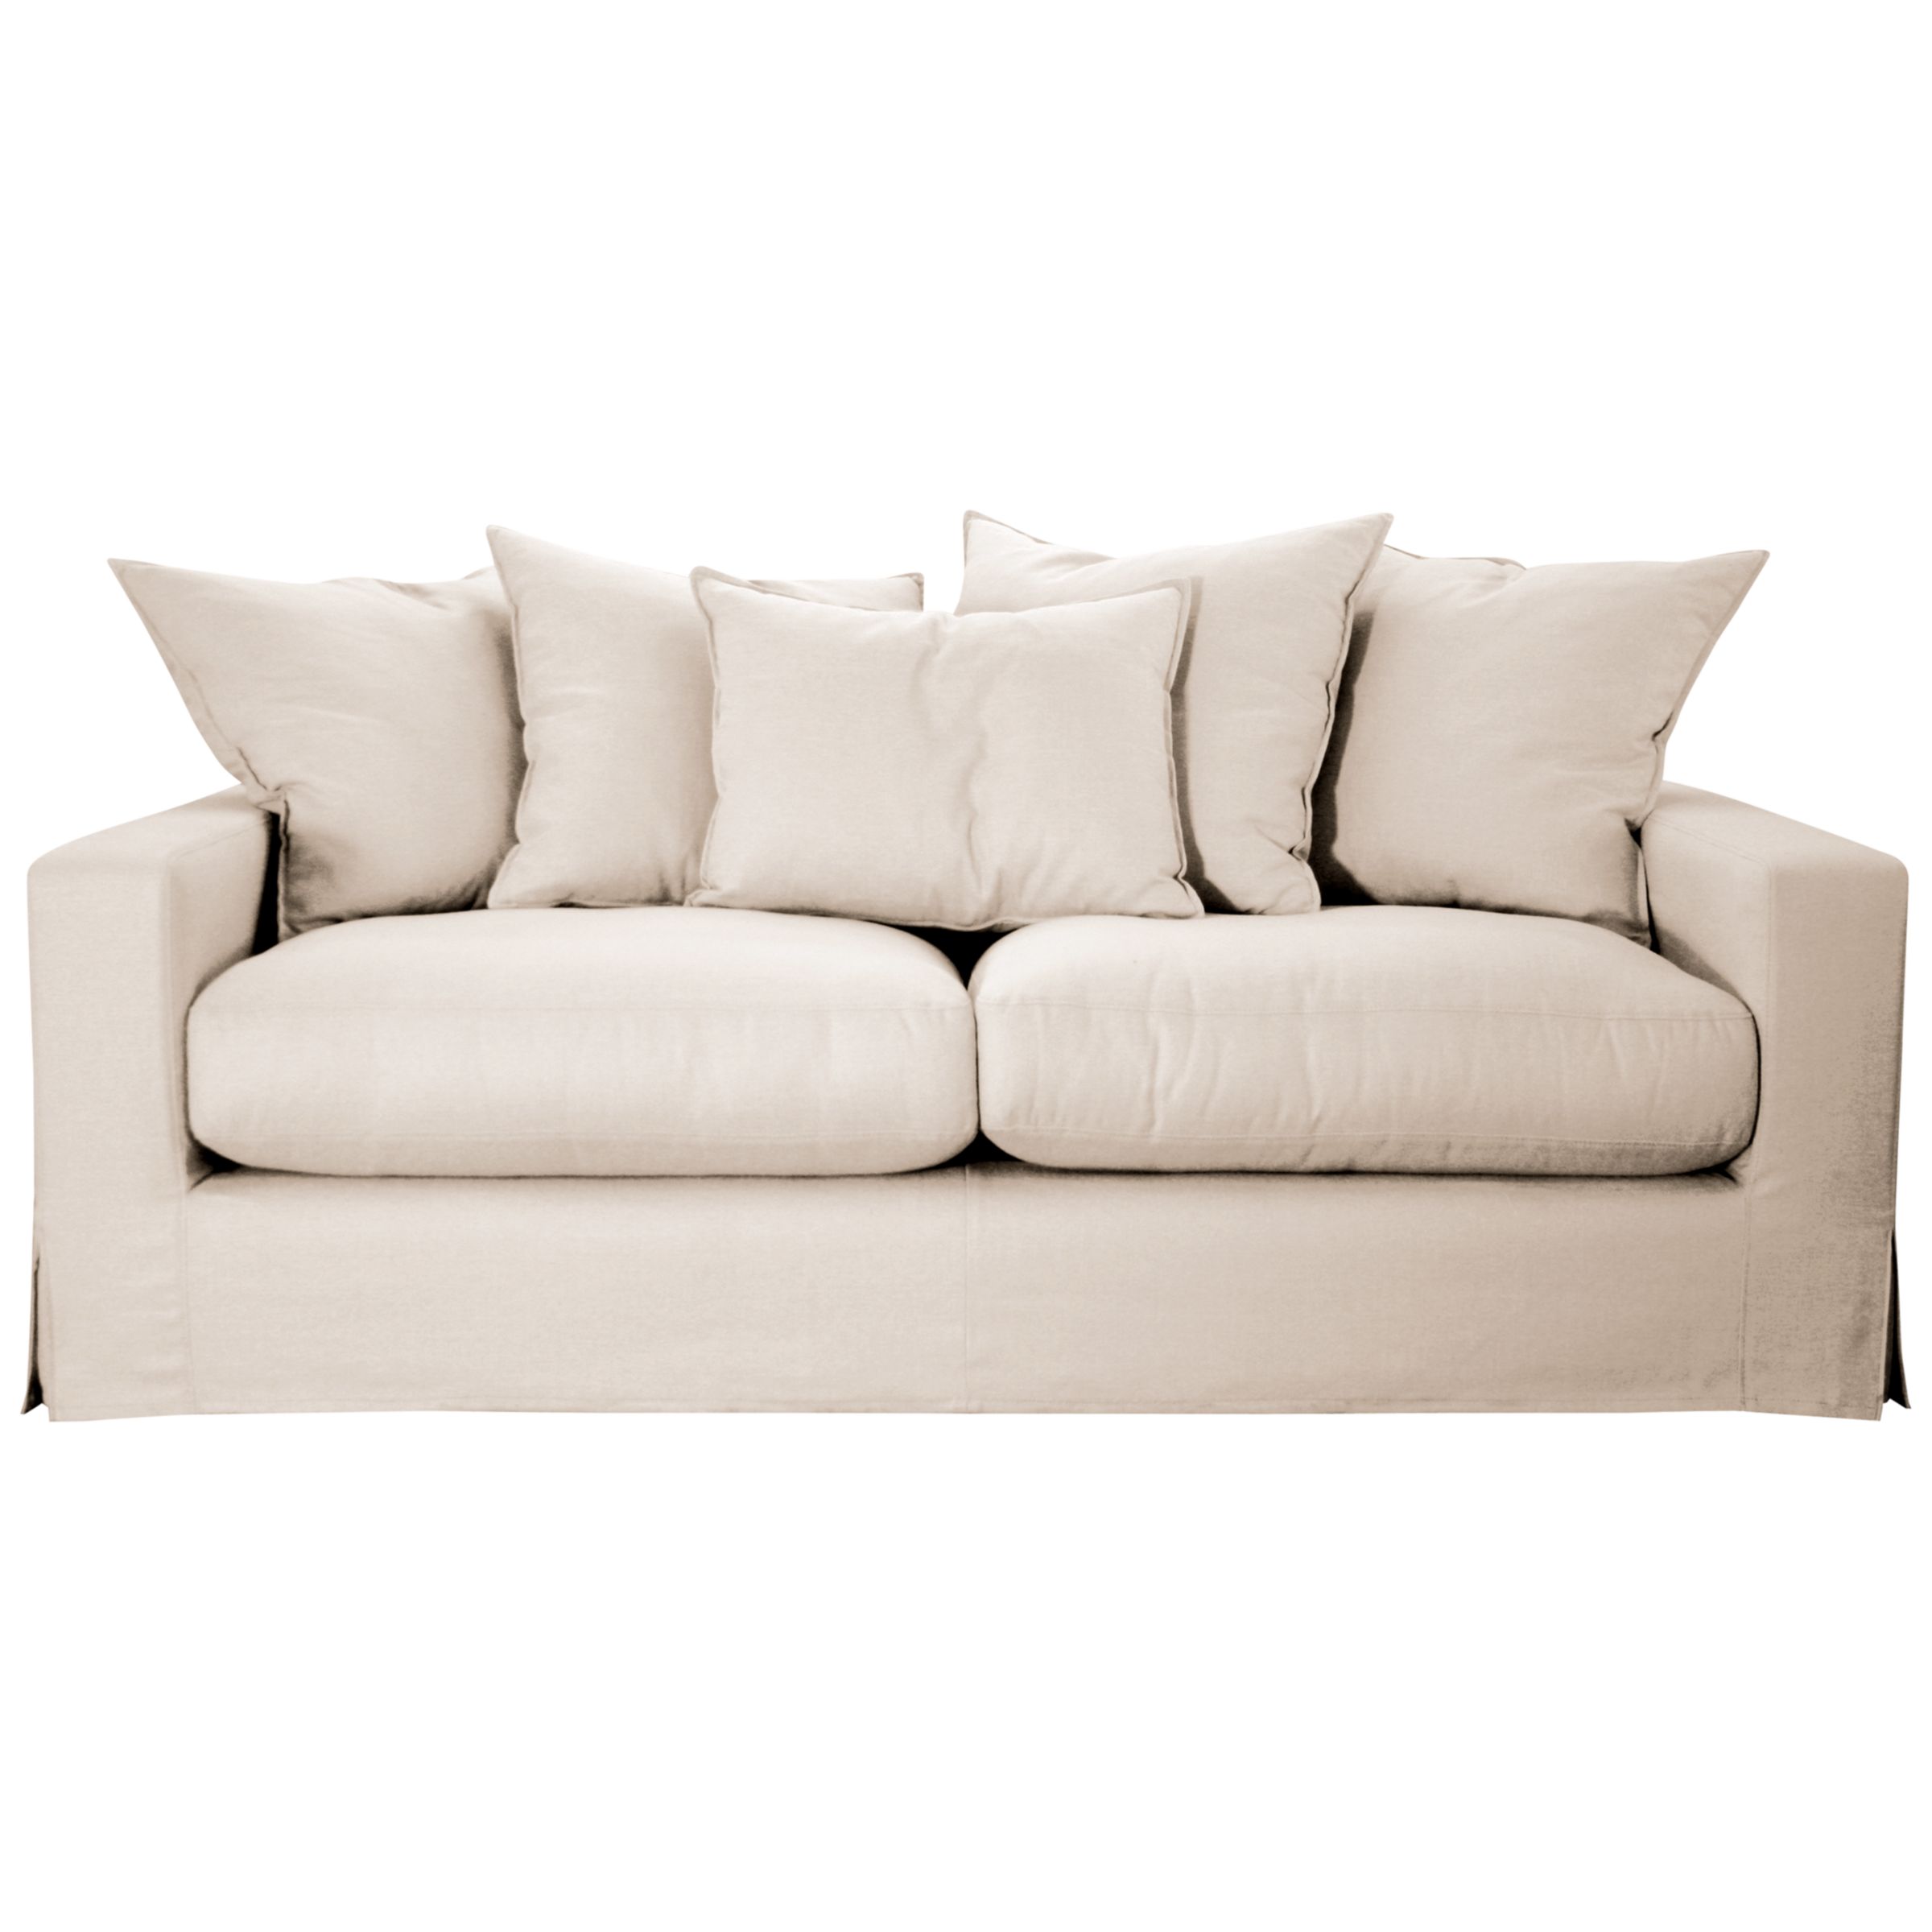 John Lewis Belle Scatter Back Medium Sofa, Latte, width 192cm